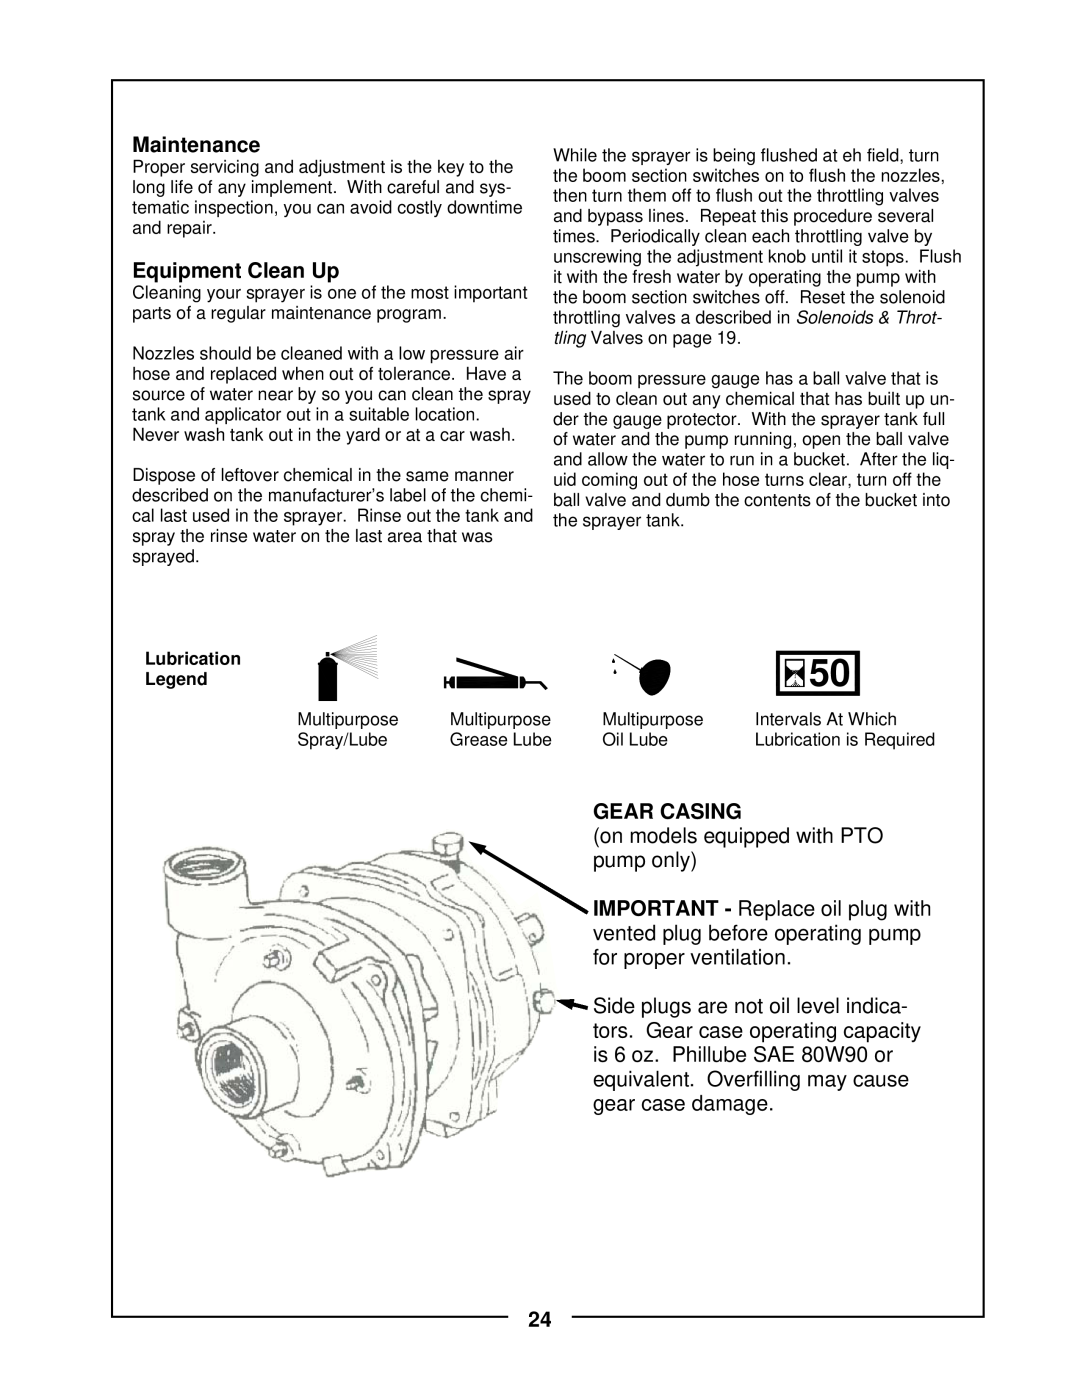 Locke TR-30 manual Gear Casing 